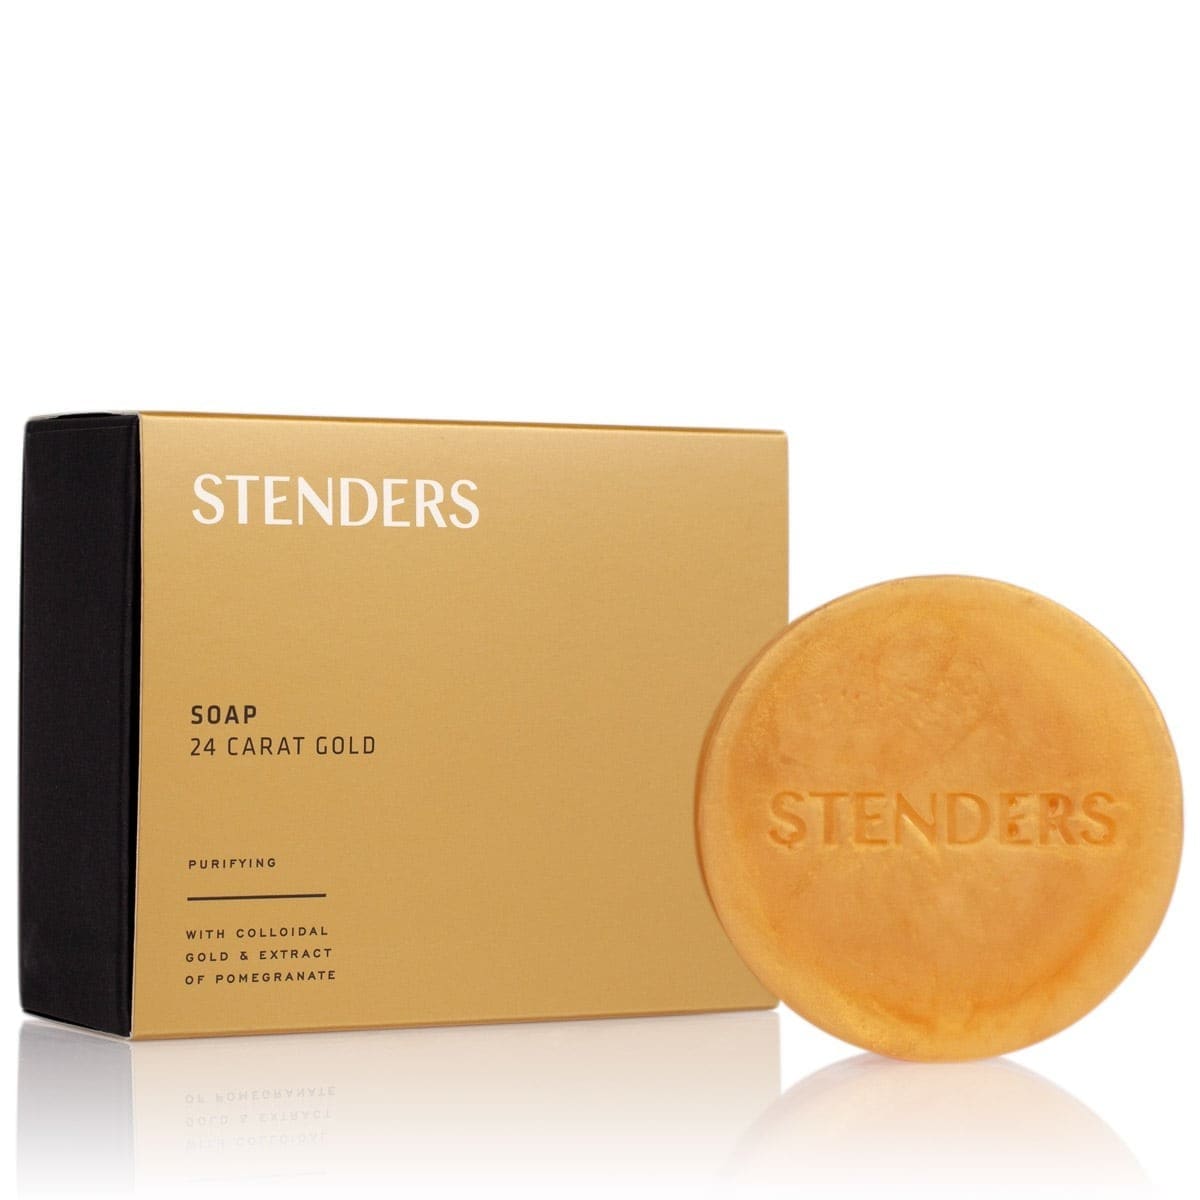 STENDERS 24 Carat Gold